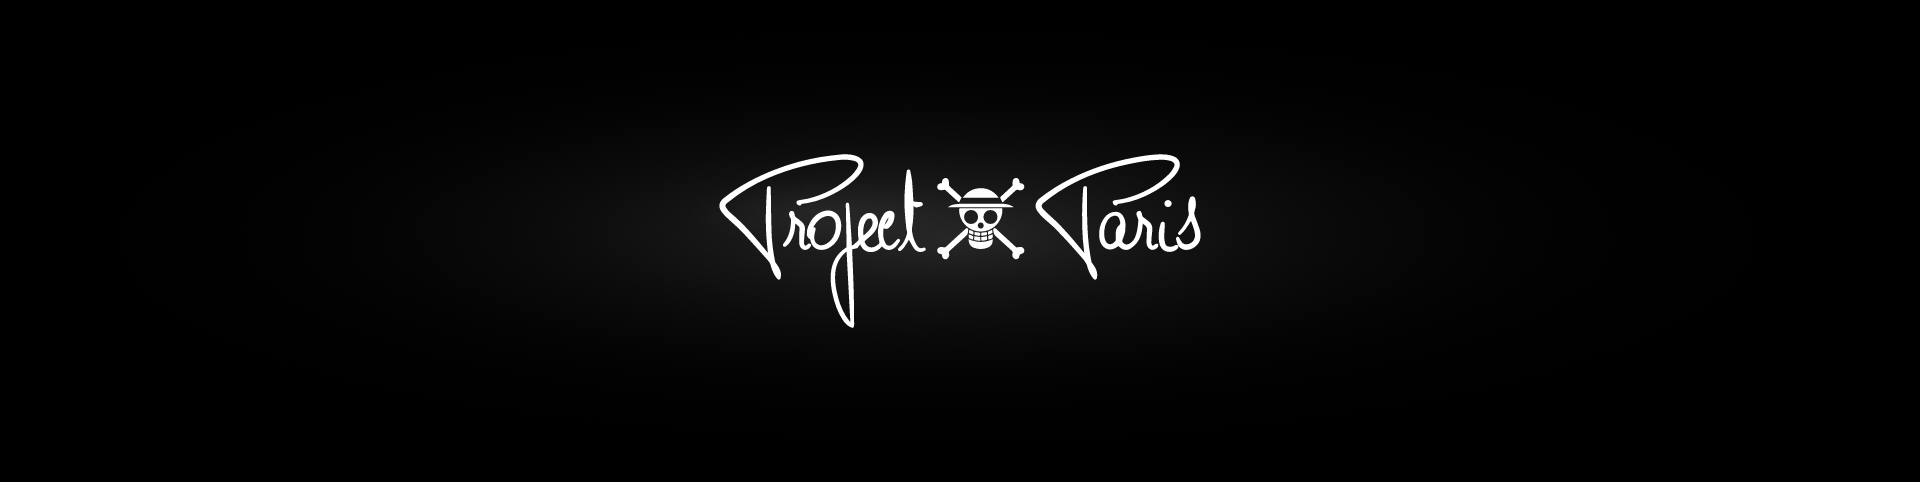 One Piece clothing - Project X Paris